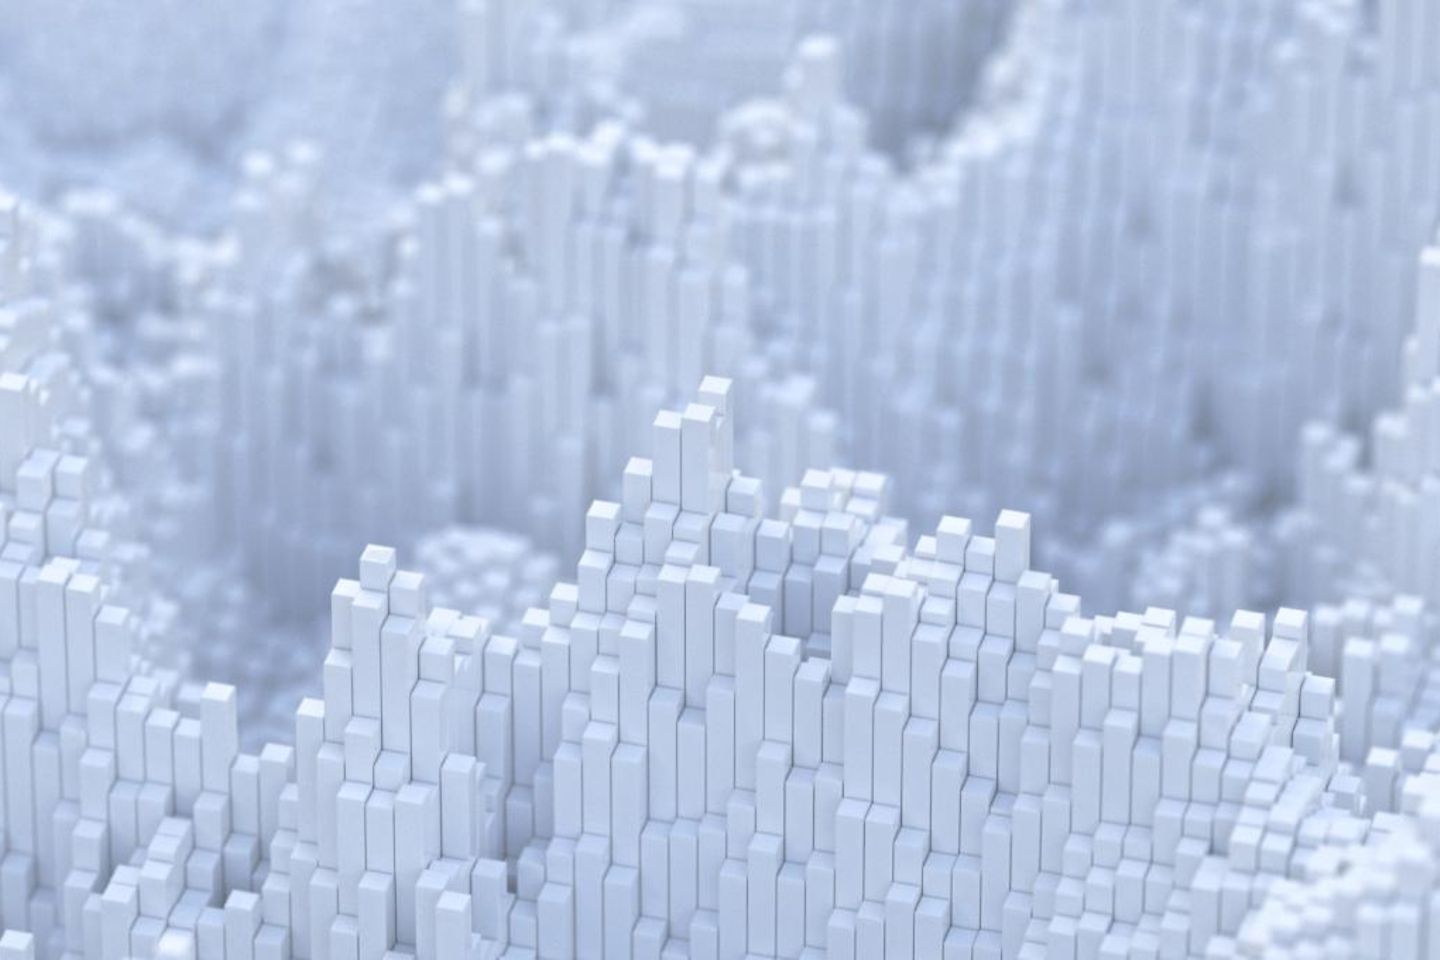 Visualisation abstraite 3D en filigrane blanc